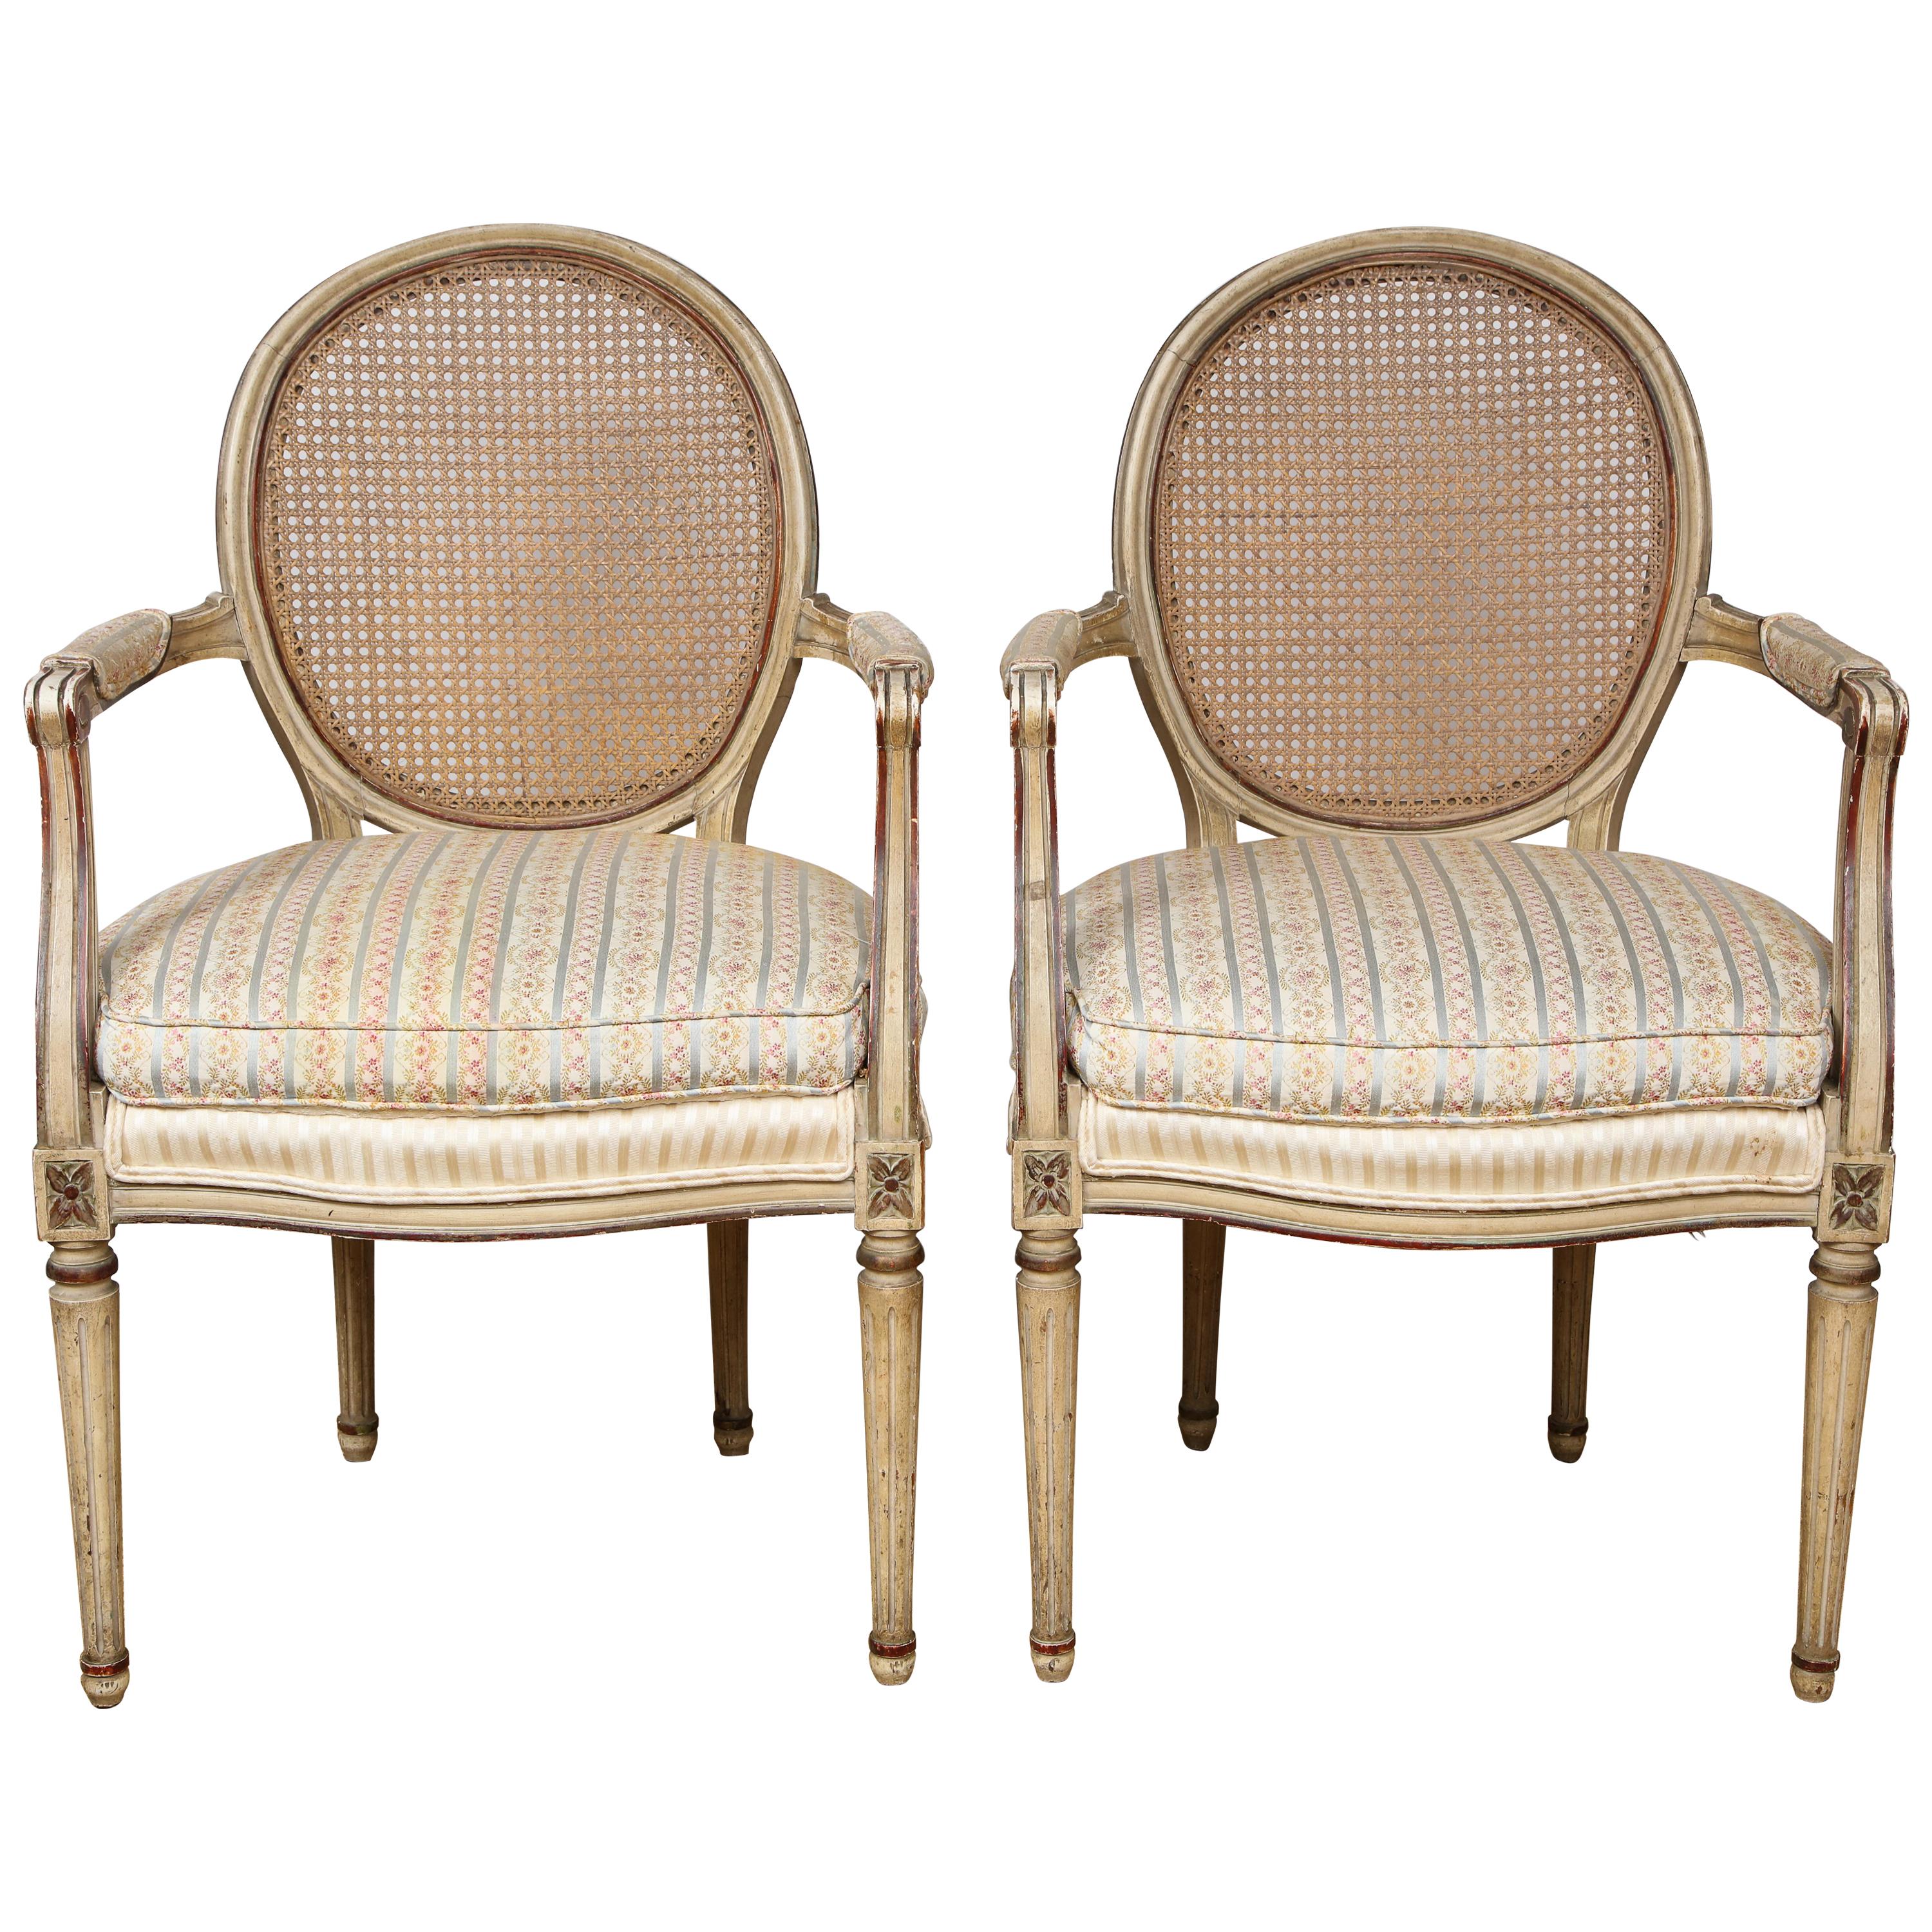 A Pair of XVI Arm Chairs